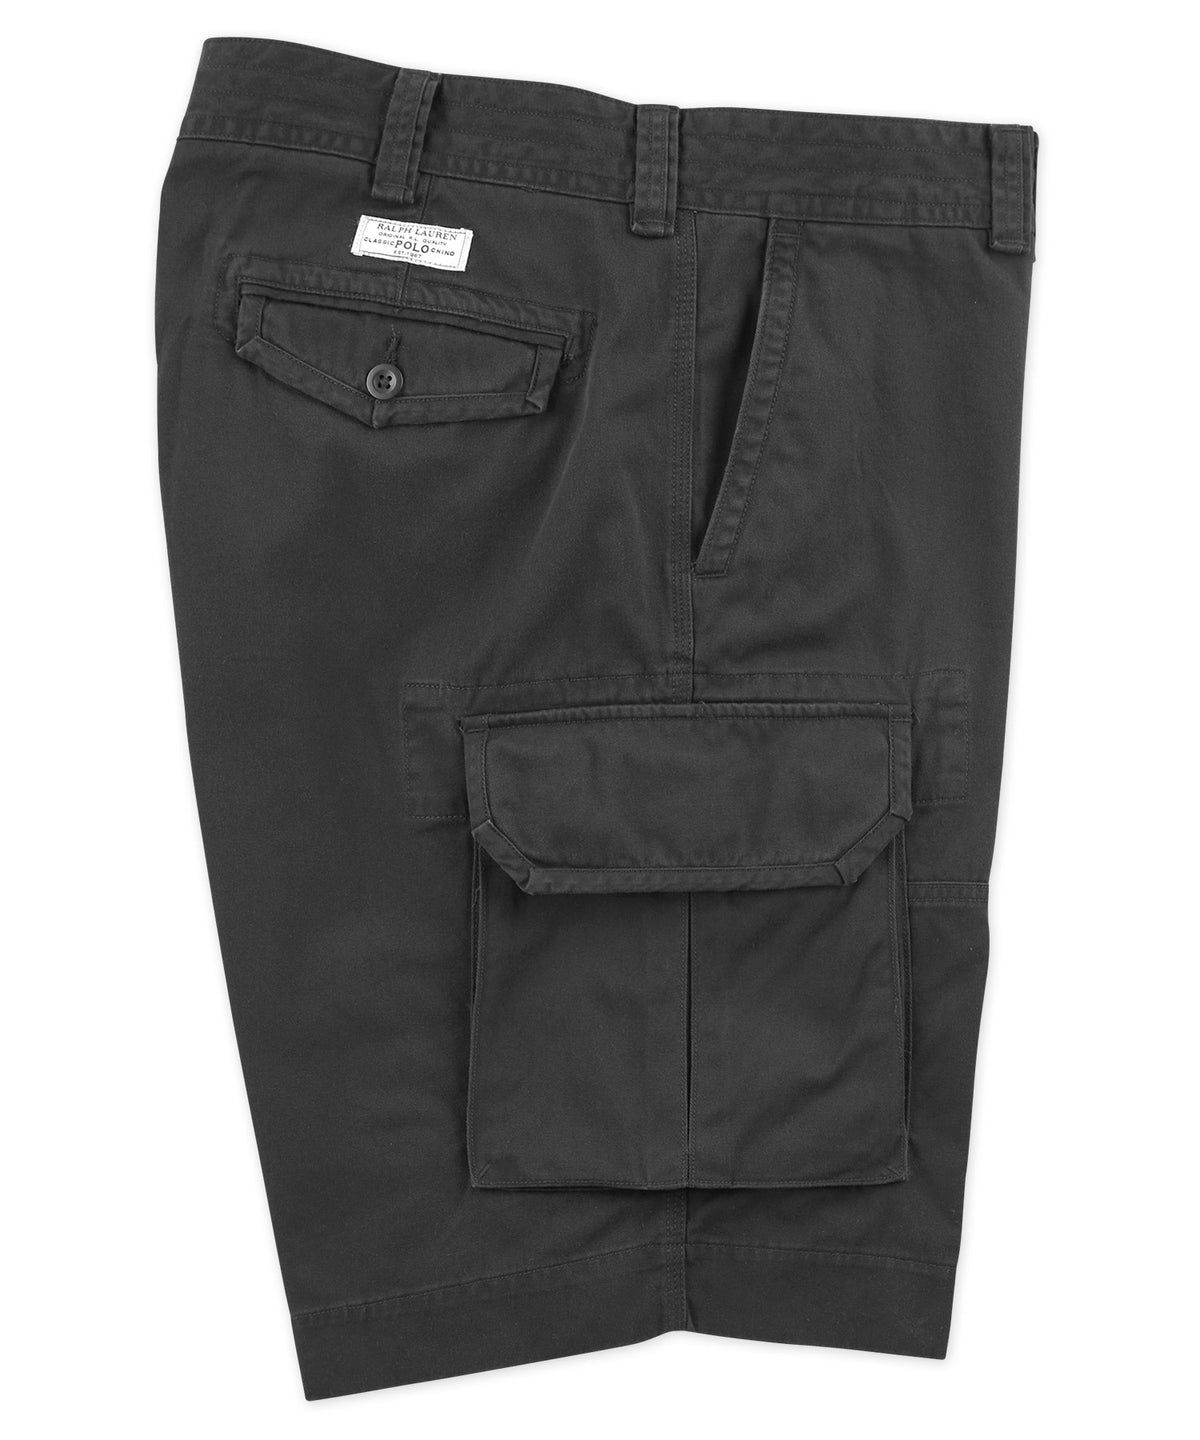 Polo Ralph Lauren Classic Twill Cargo Shorts, Big & Tall